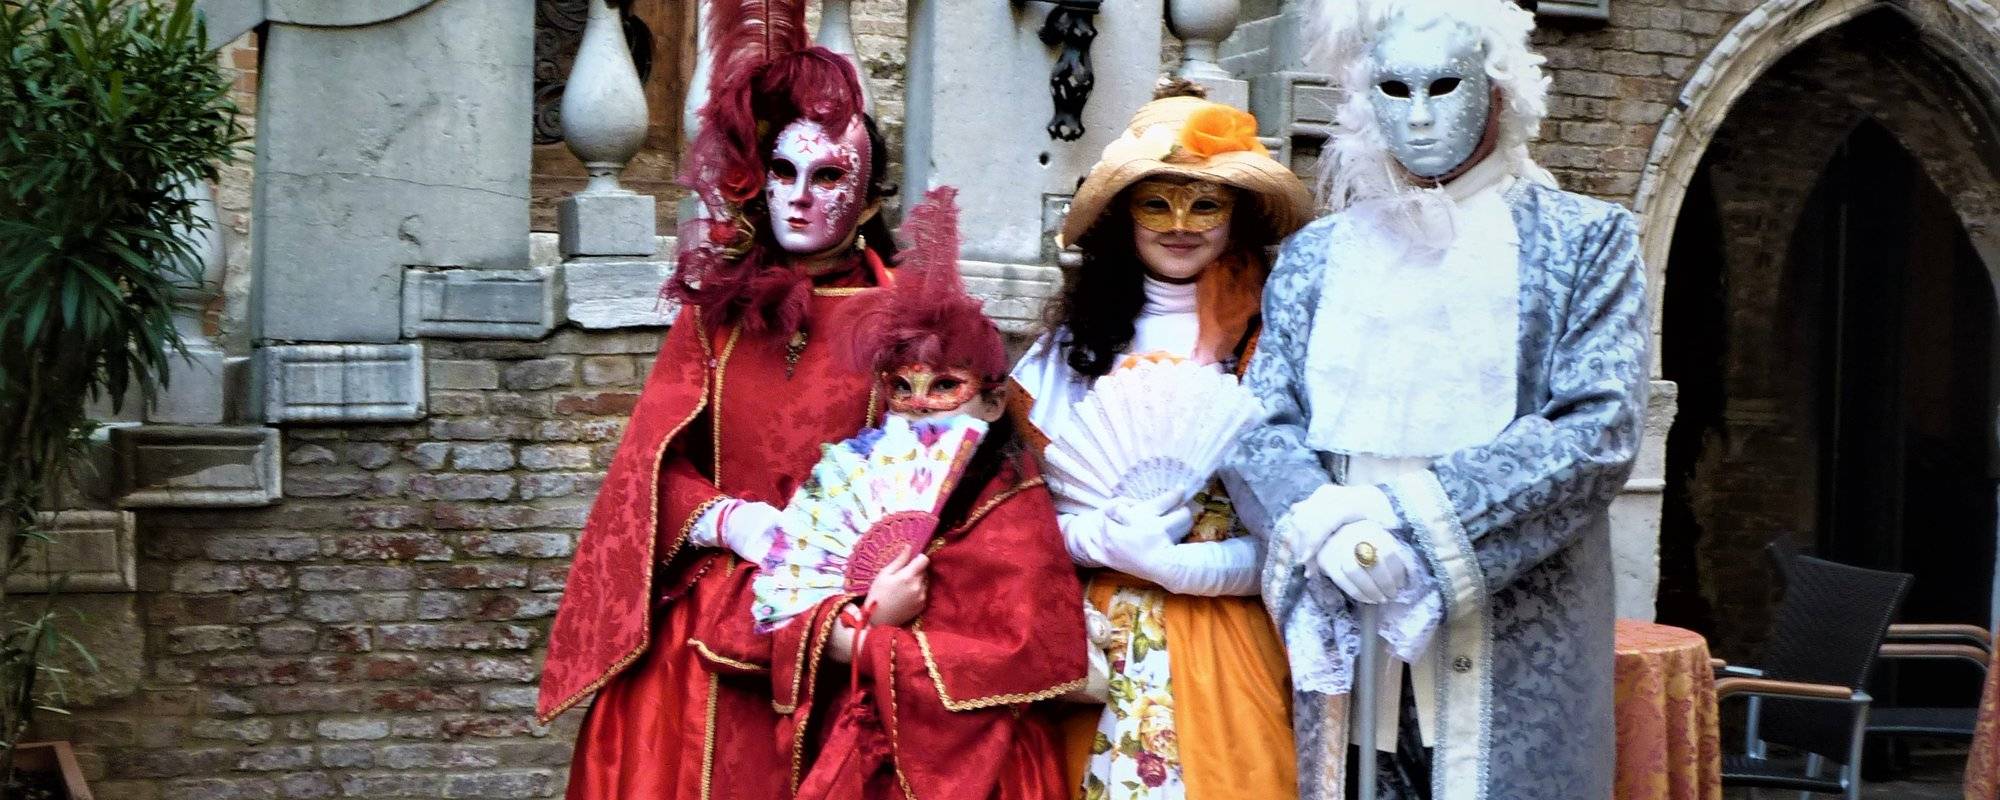 Venice Carnival 2018 - unforgettable memories